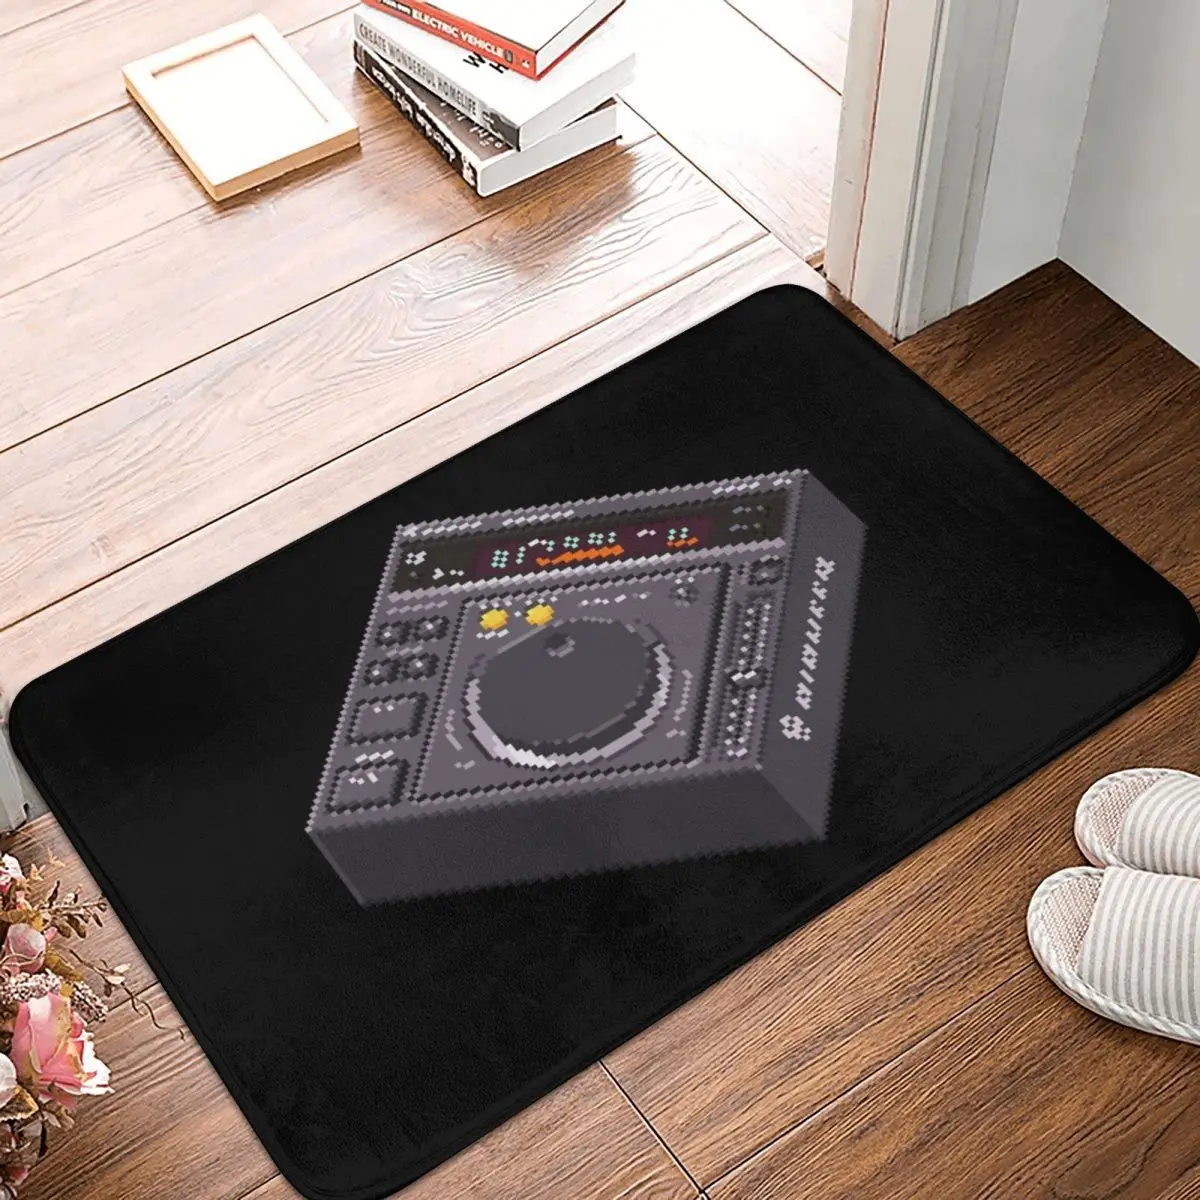 

CDJ-500s Player Pixel Art Doormat Polyester Floor Mat Antiwear Carpet Kitchen Entrance Home Rugs Mats Bedroom Non-slip Footpad